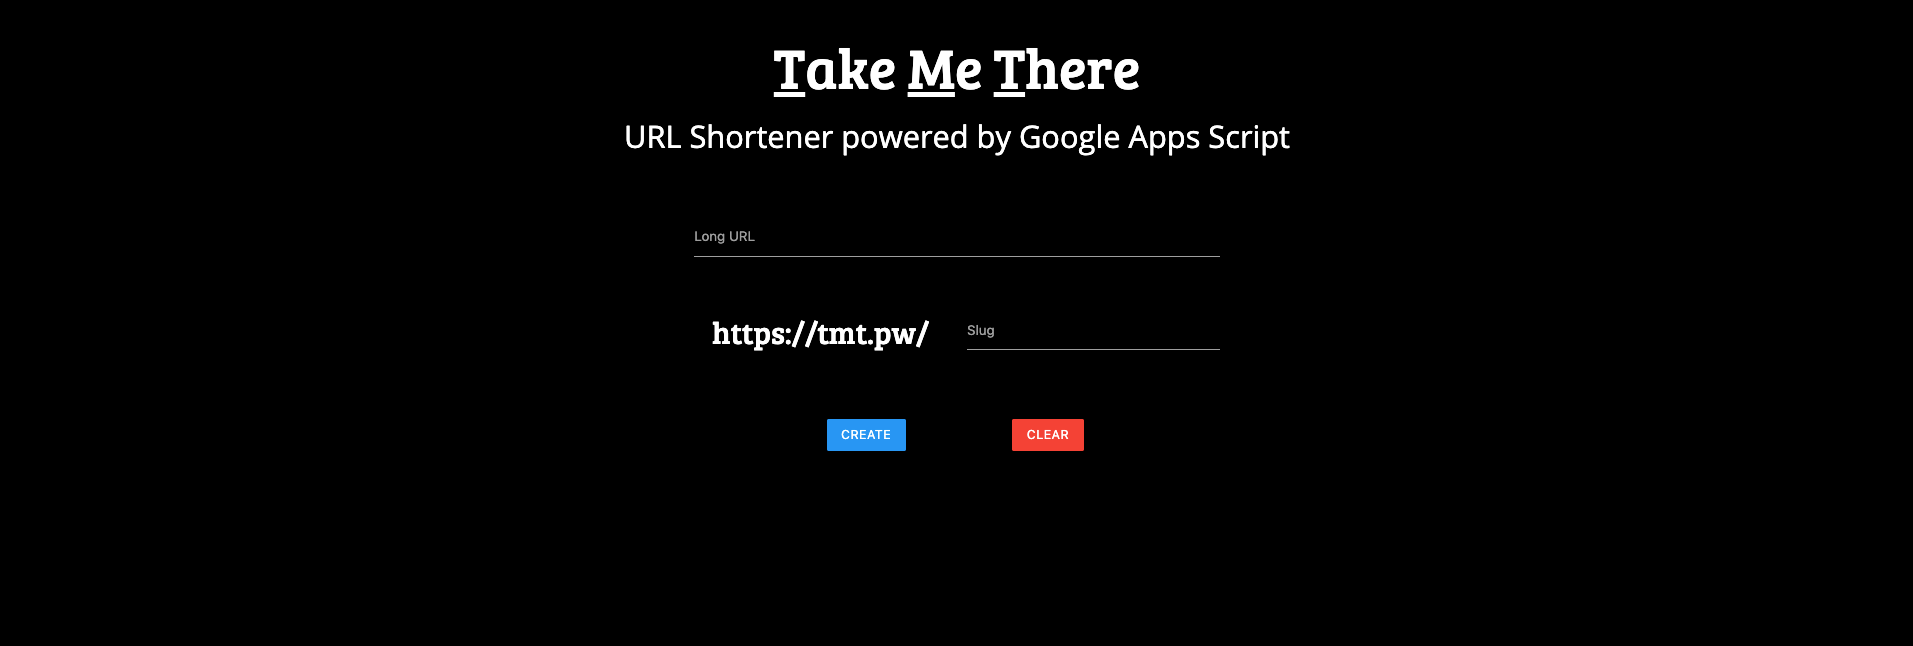 URL Shortener powered by Google Apps Script